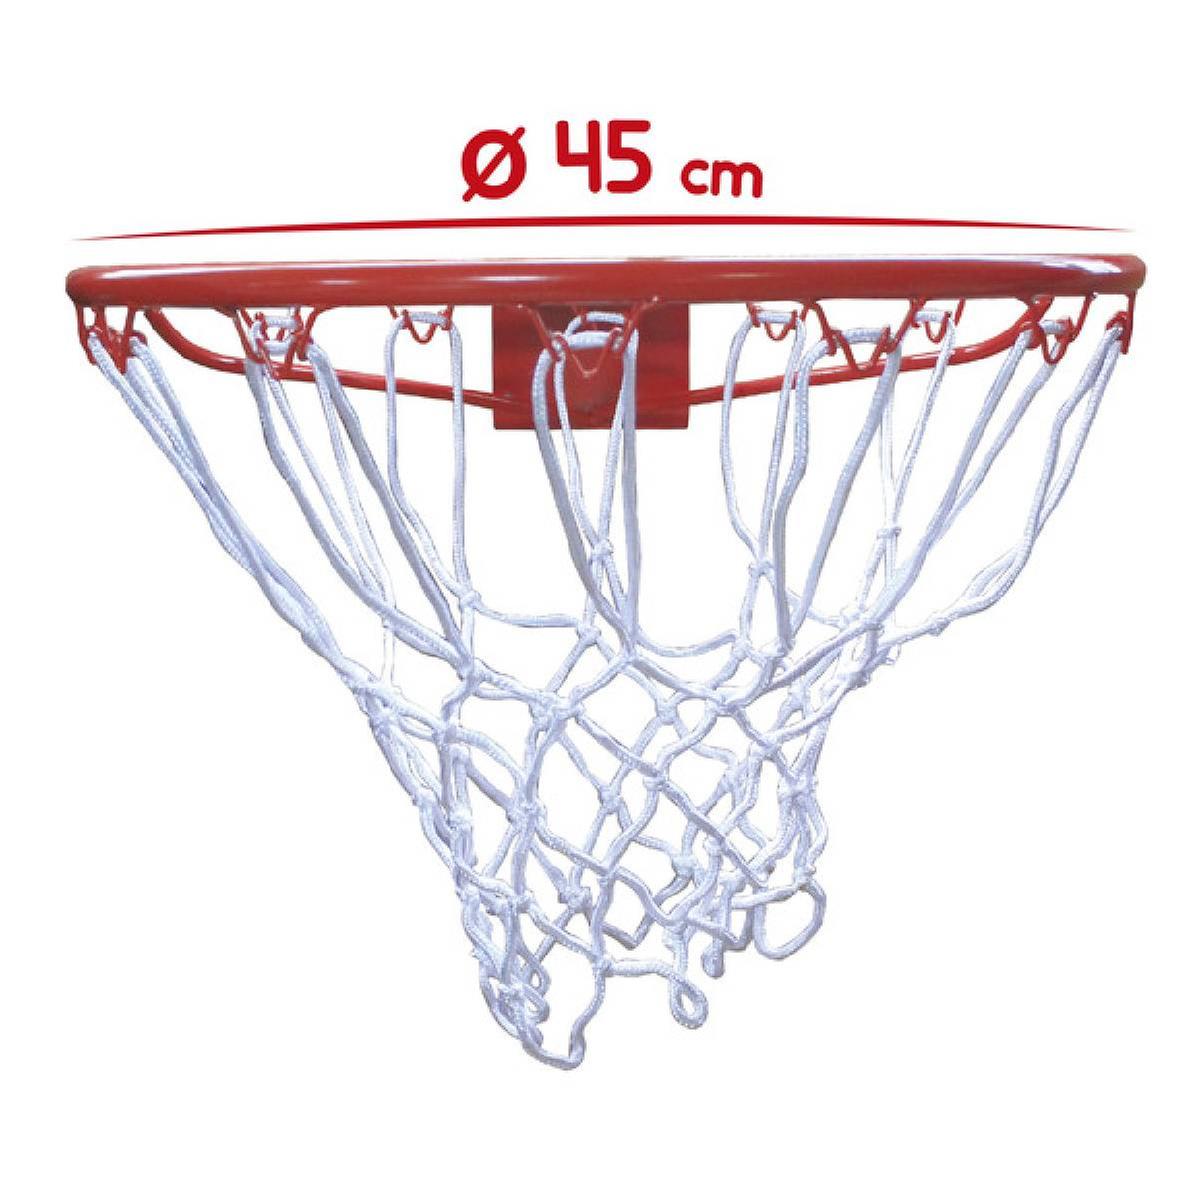 Mini Canasta Basketball Basquetball Basketbol Nerf Aro